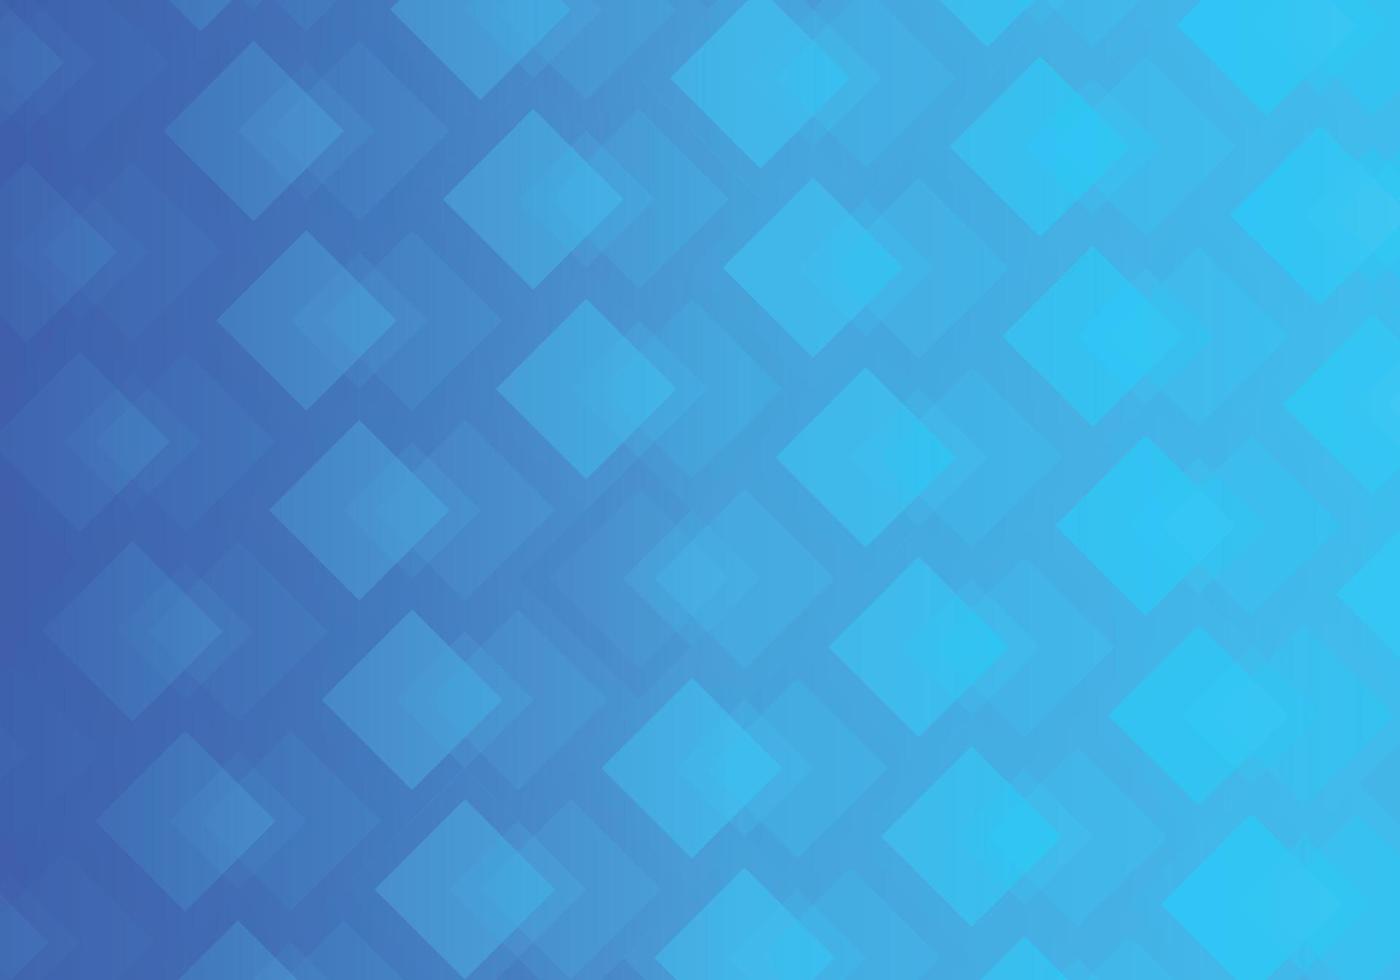 fundo abstrato composto por gradiente de quadrados com temas tecnológicos de azul claro a escuro vetor